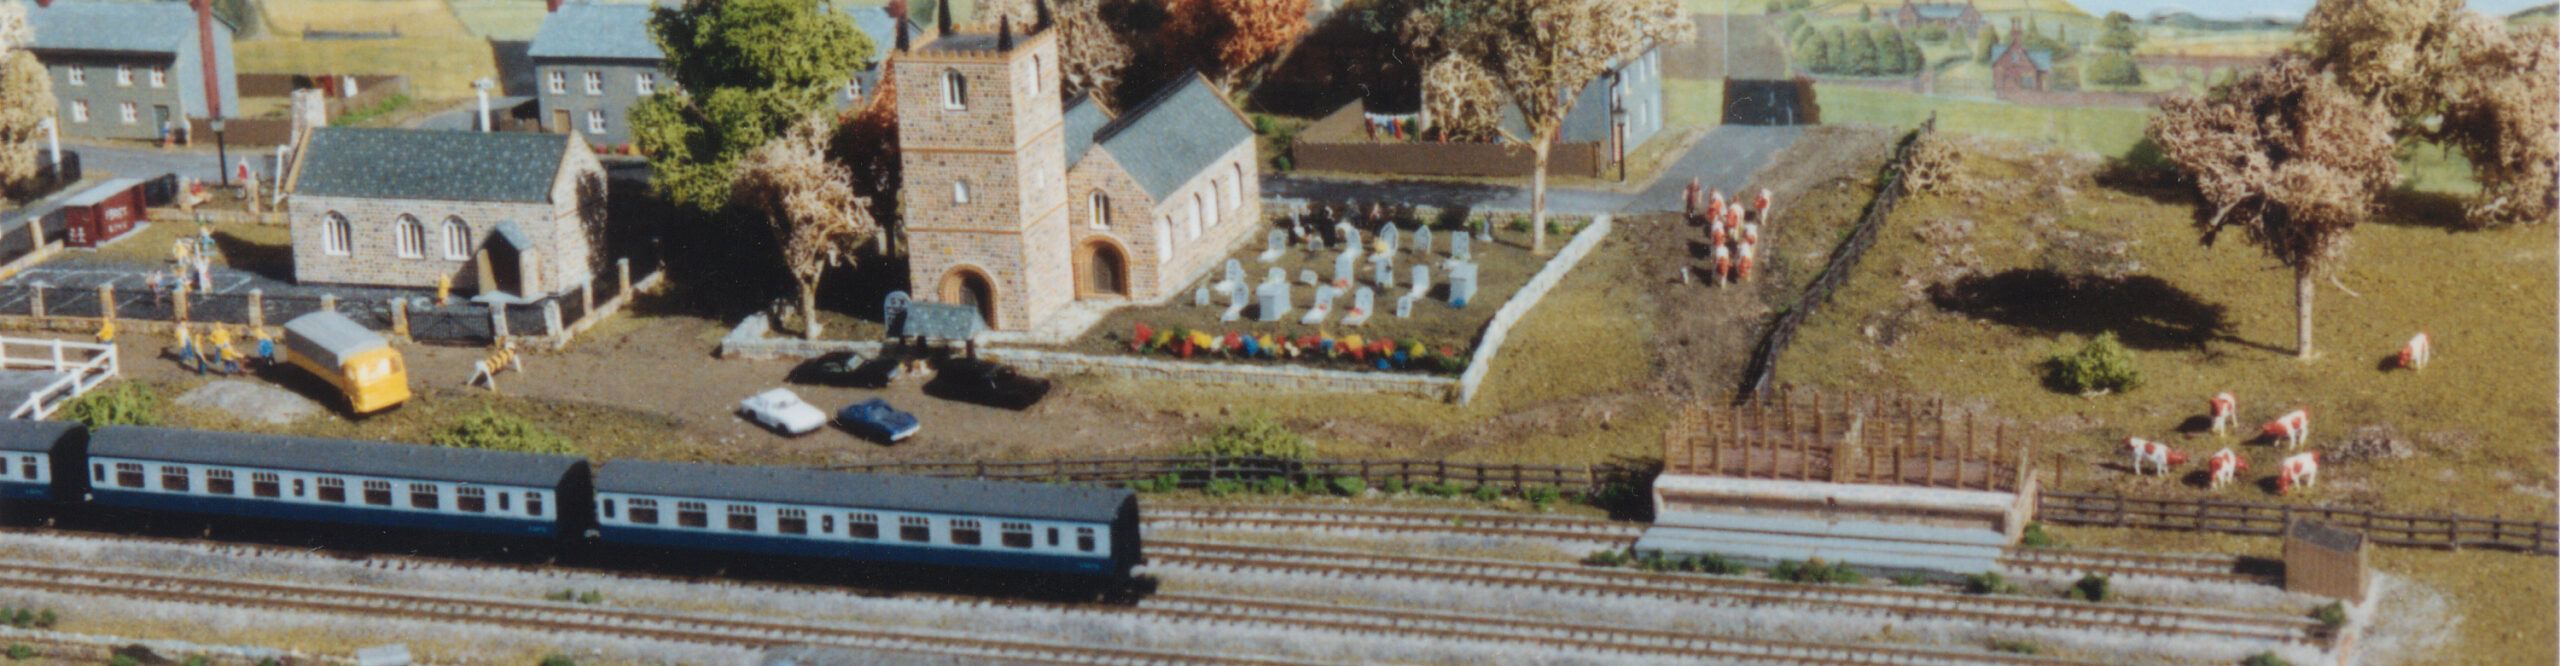 Southern N Scale Model Railway Club Inc.